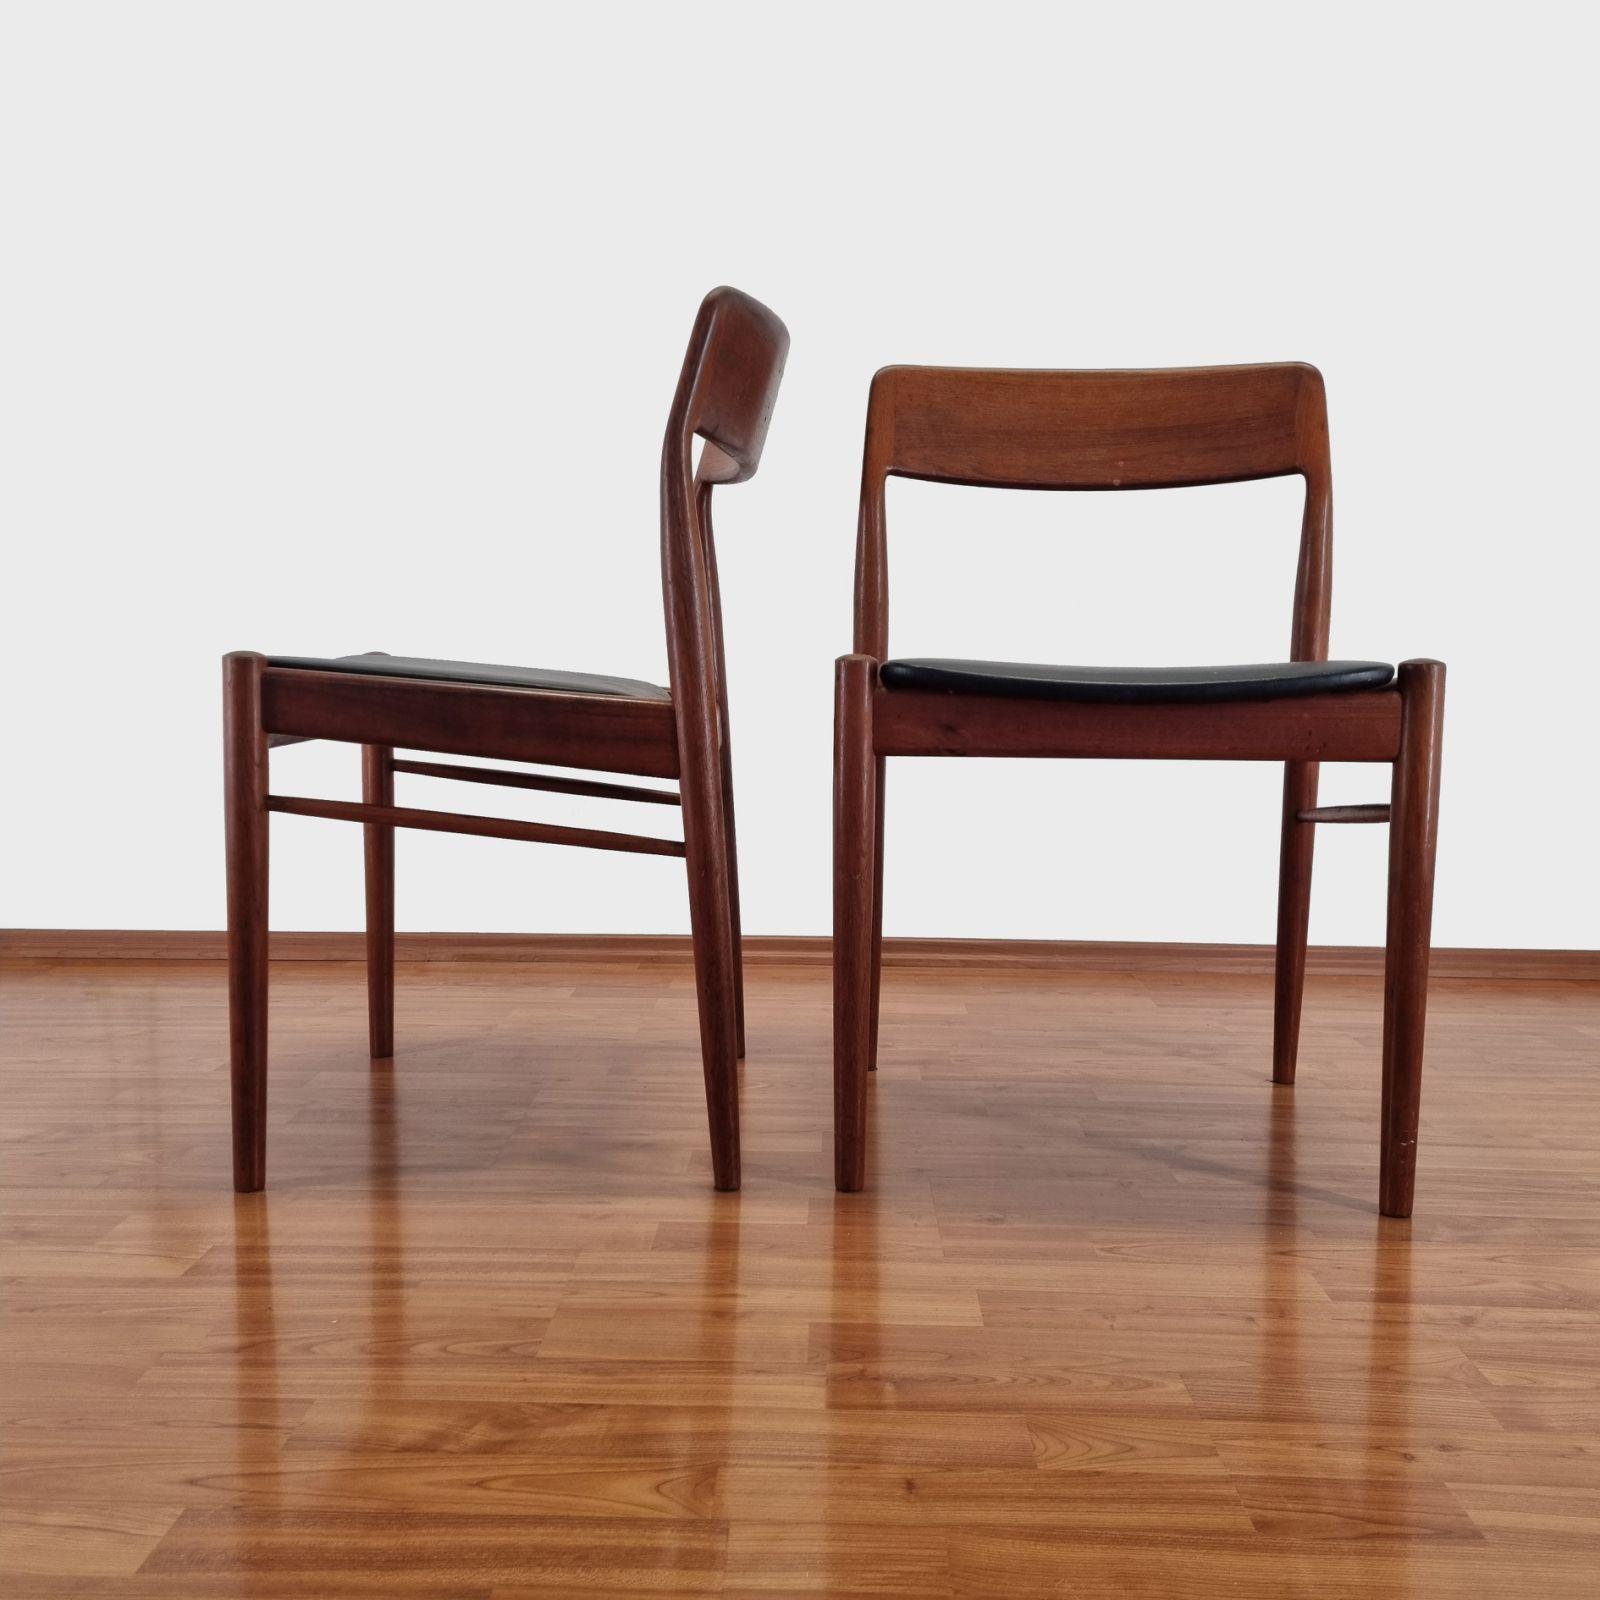 Danish Scandinavian Modern Teak Dining Chairs, Design By Niels Otto Möller, Denmark 60s For Sale